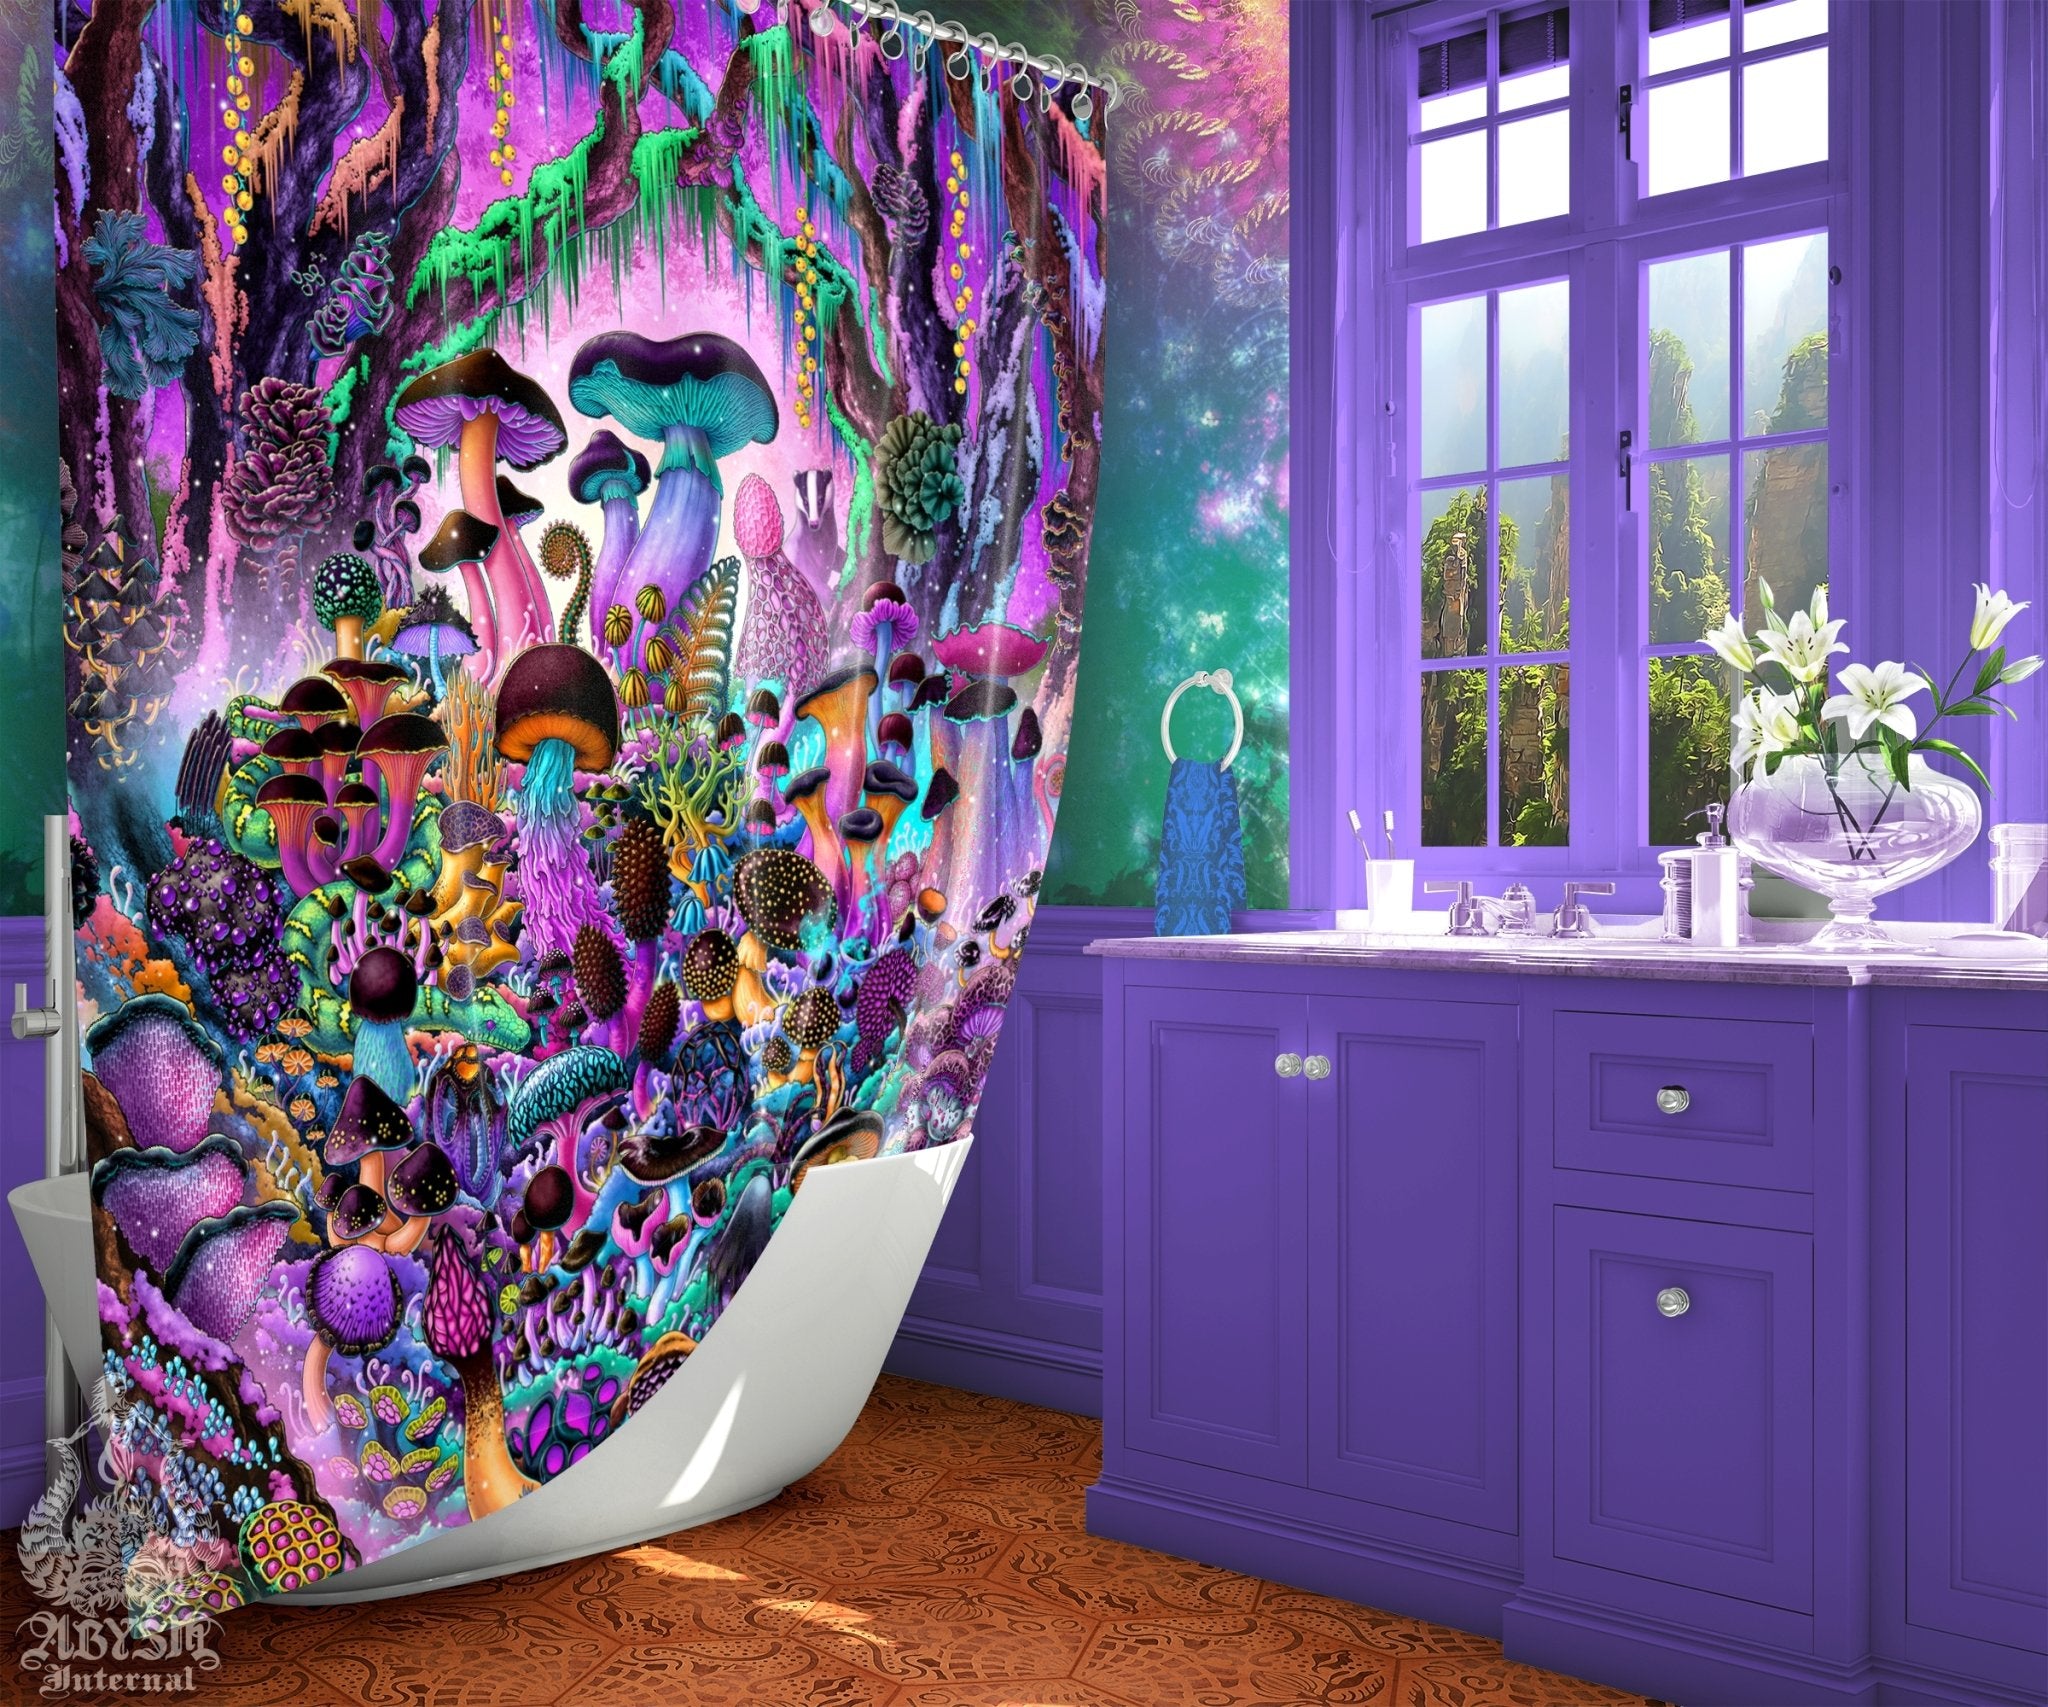 https://cdn.shopify.com/s/files/1/0584/5608/0574/products/mushrooms-shower-curtain-girl-bathroom-decor-aesthetic-home-art-mycologist-gift-pastel-black-magic-shrooms-abysm-internal-306913.jpg?v=1686711066&width=4096